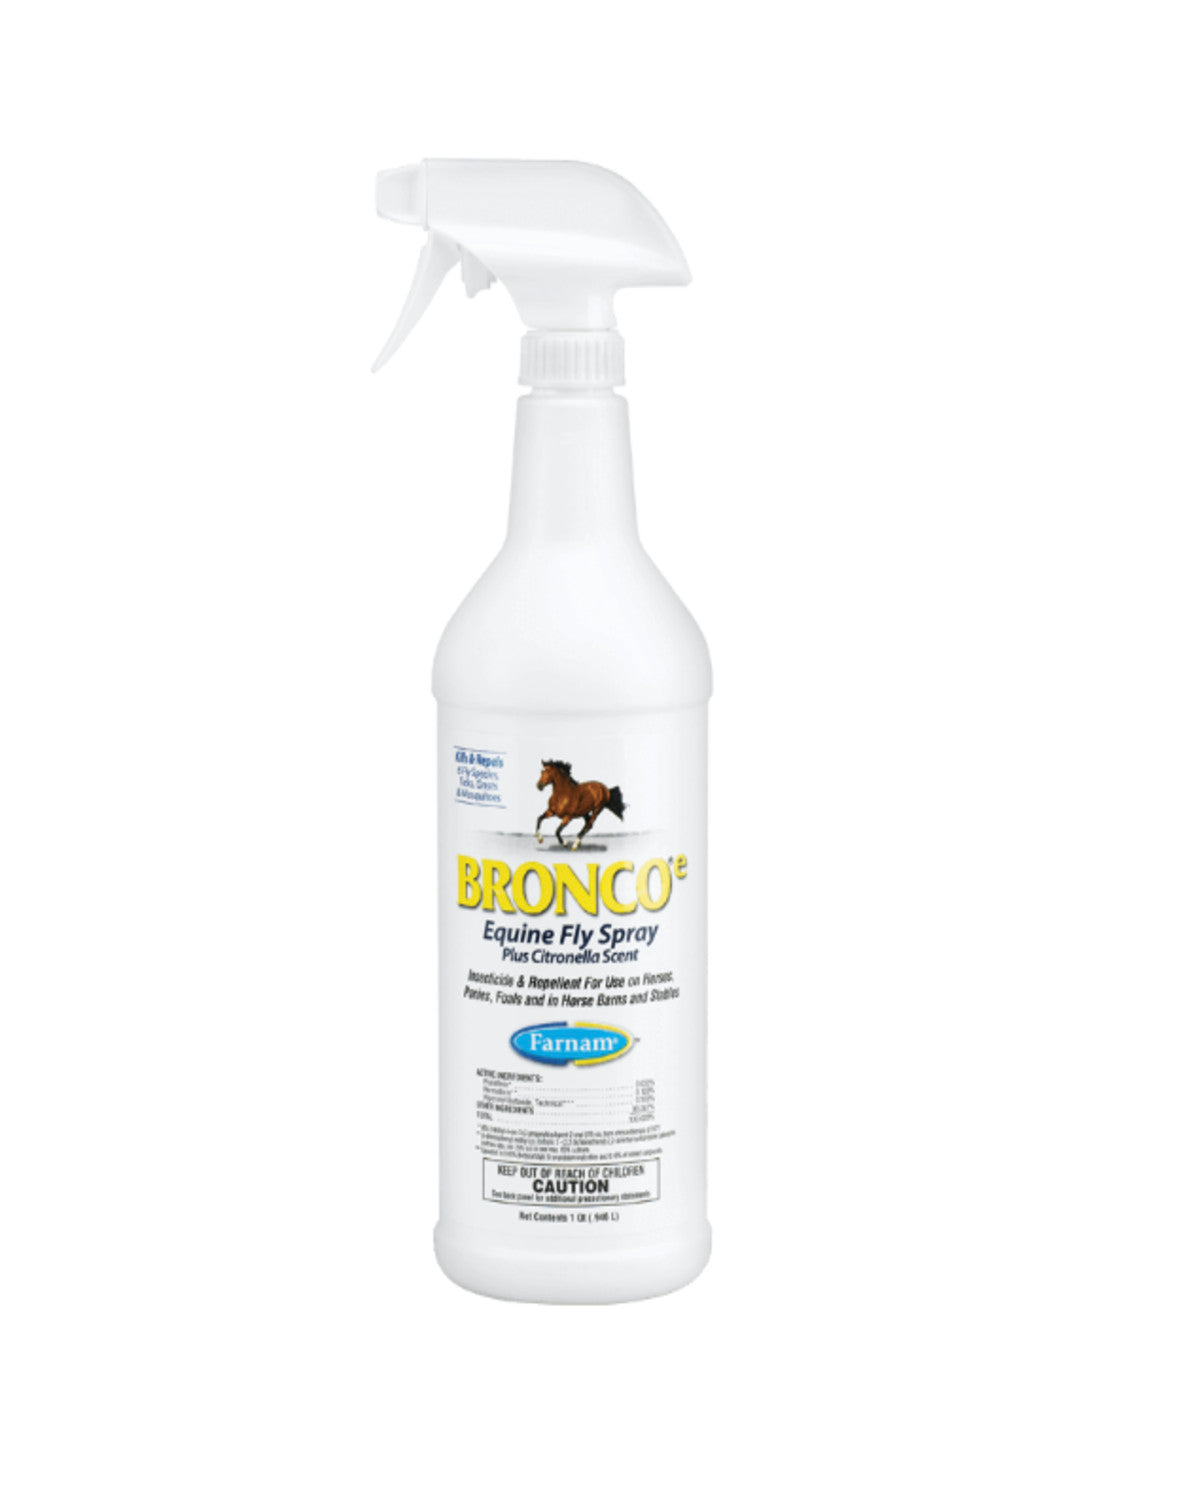 Bronco-e Fly Spray 32 oz